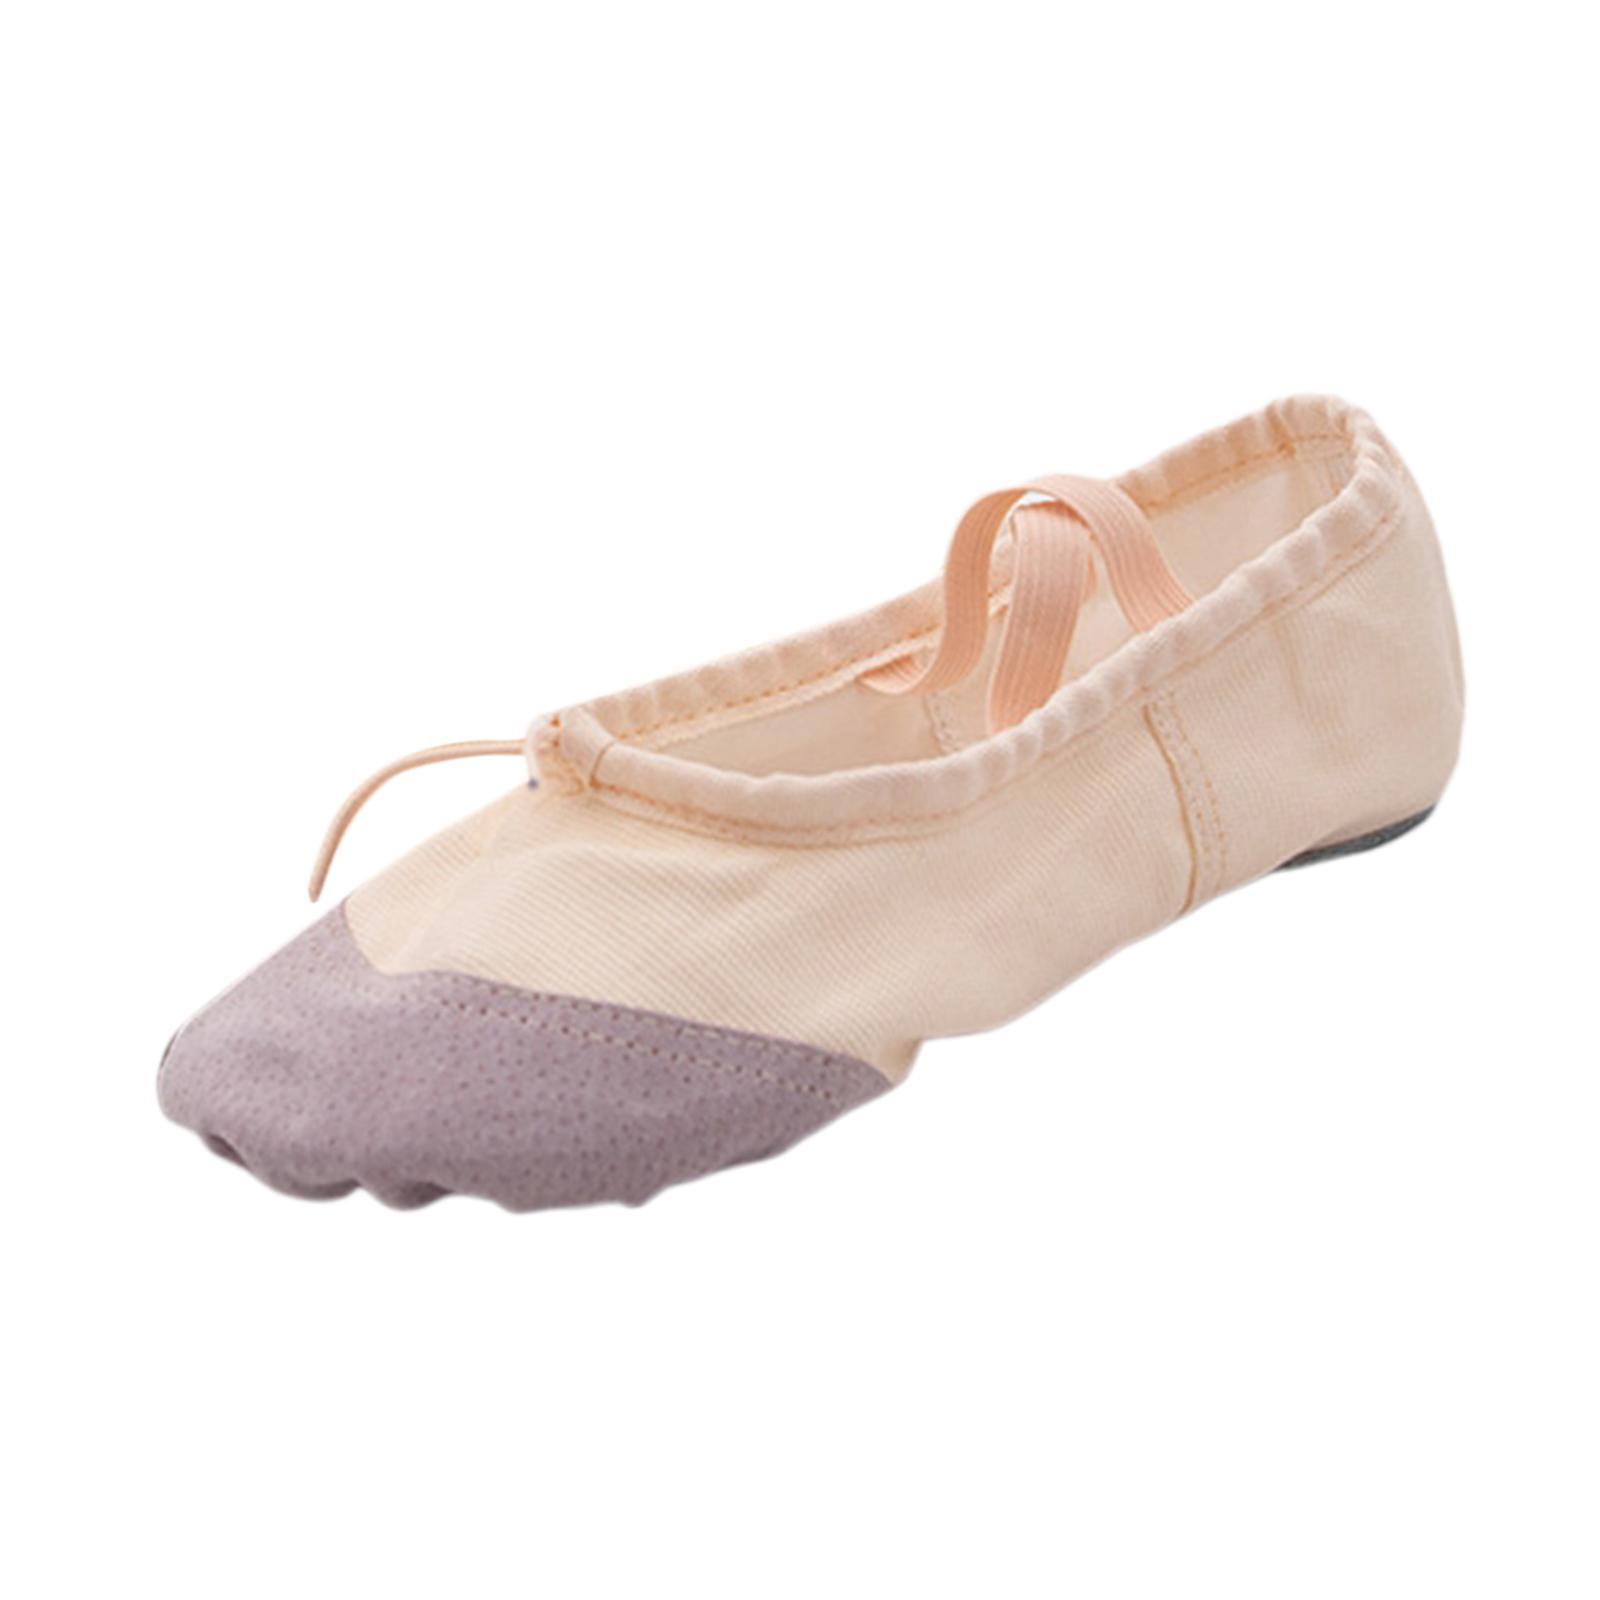 Women Ballet Shoes Low Heel Closed Toe Canvas Soft Sole Adults Dancing Shoes